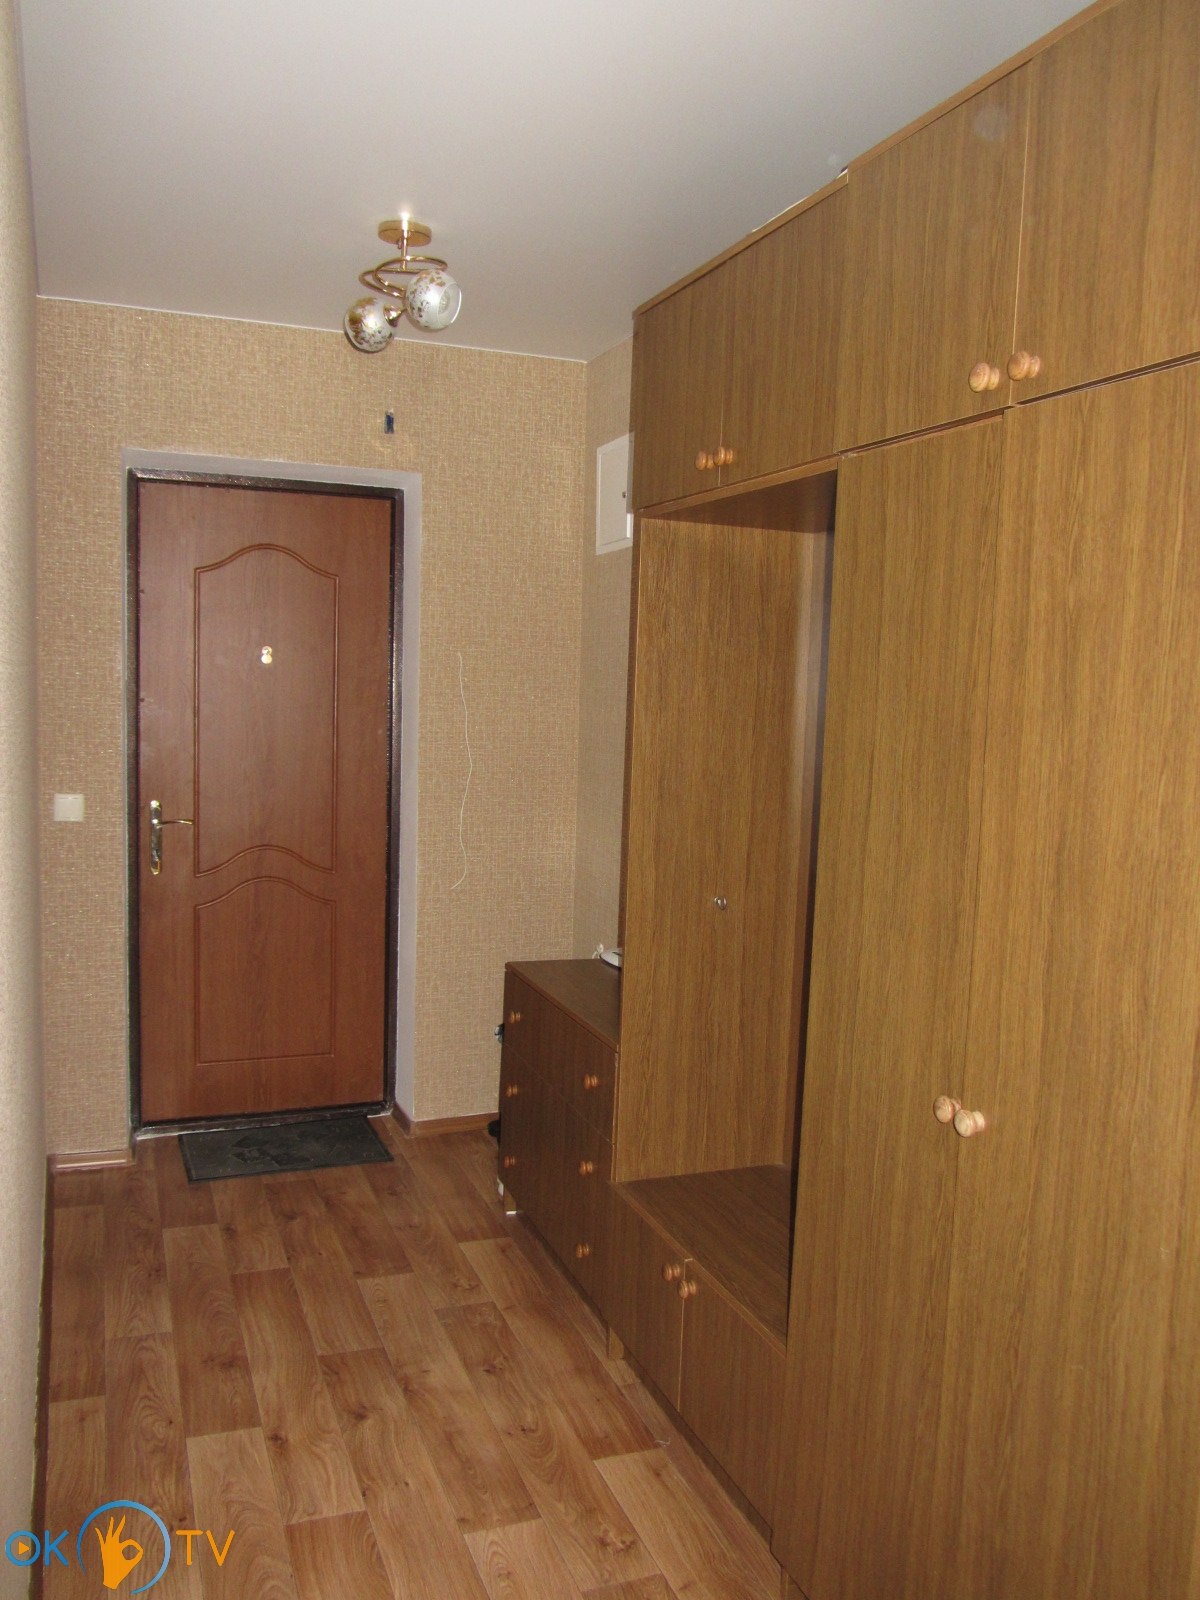 Квартира в новострое возле стадиона «Локомотив» фото 6